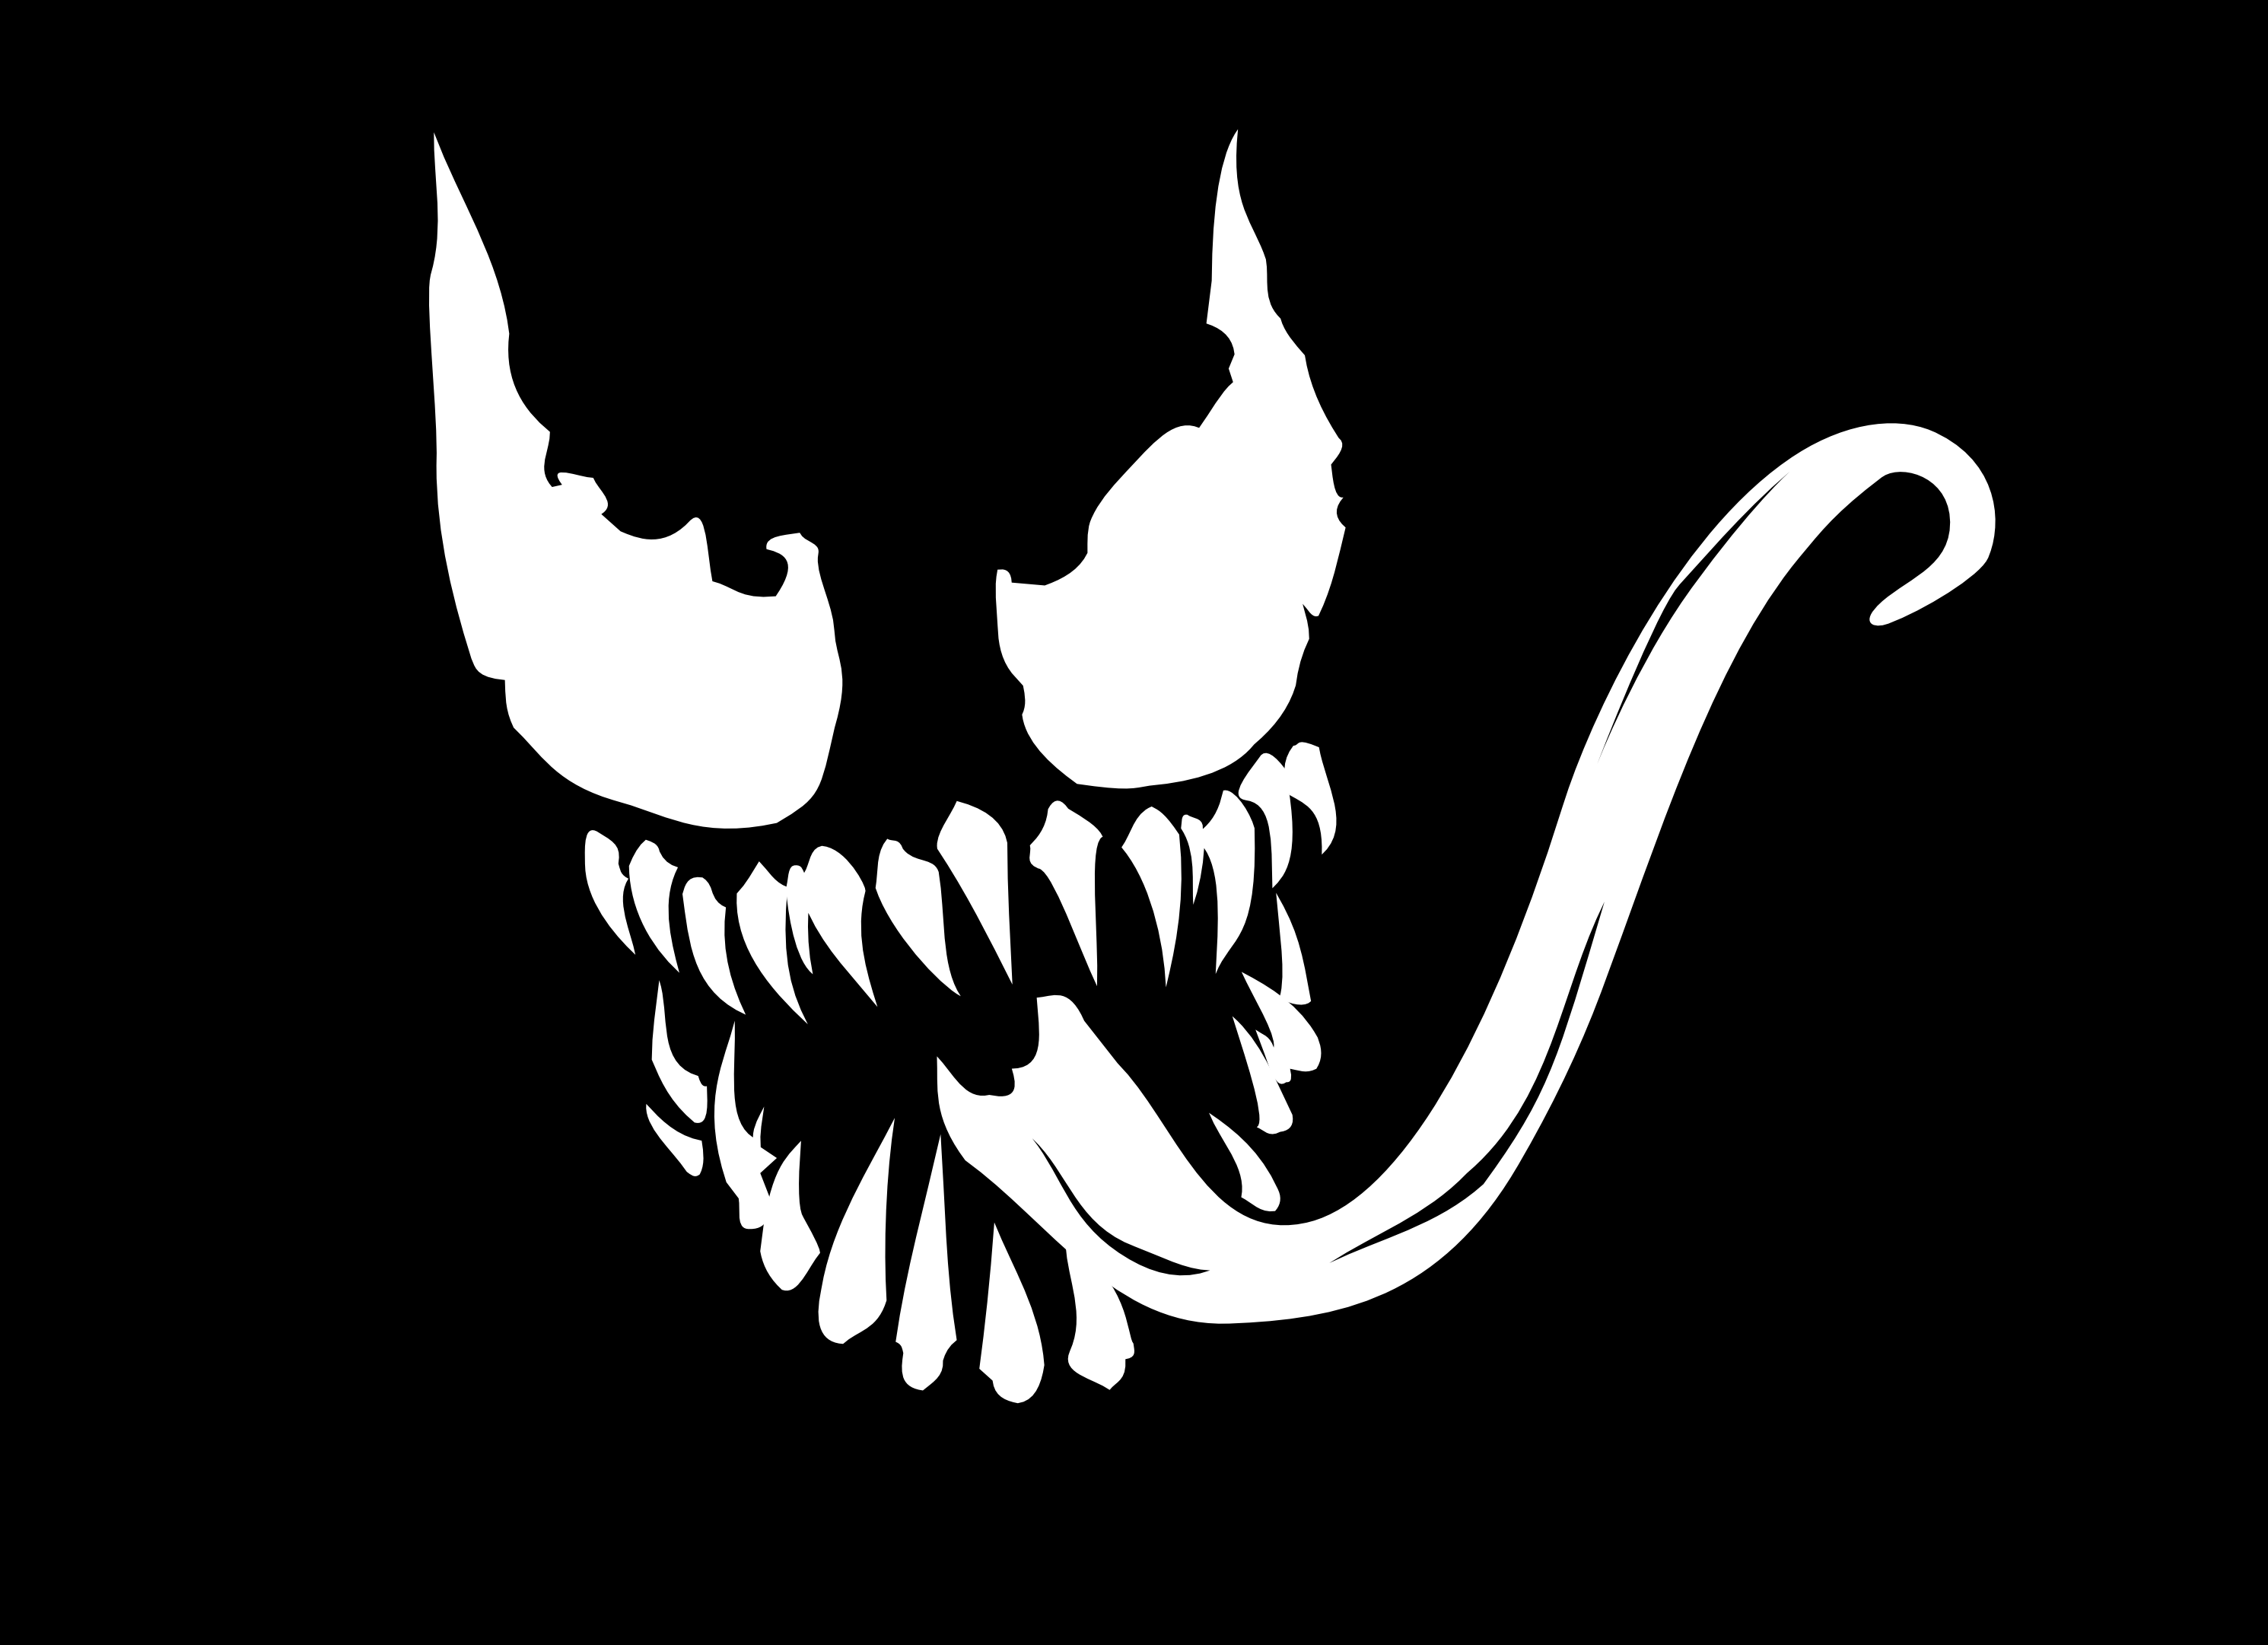 Free Venom Silhouette, Download Free Venom Silhouette png images, Free